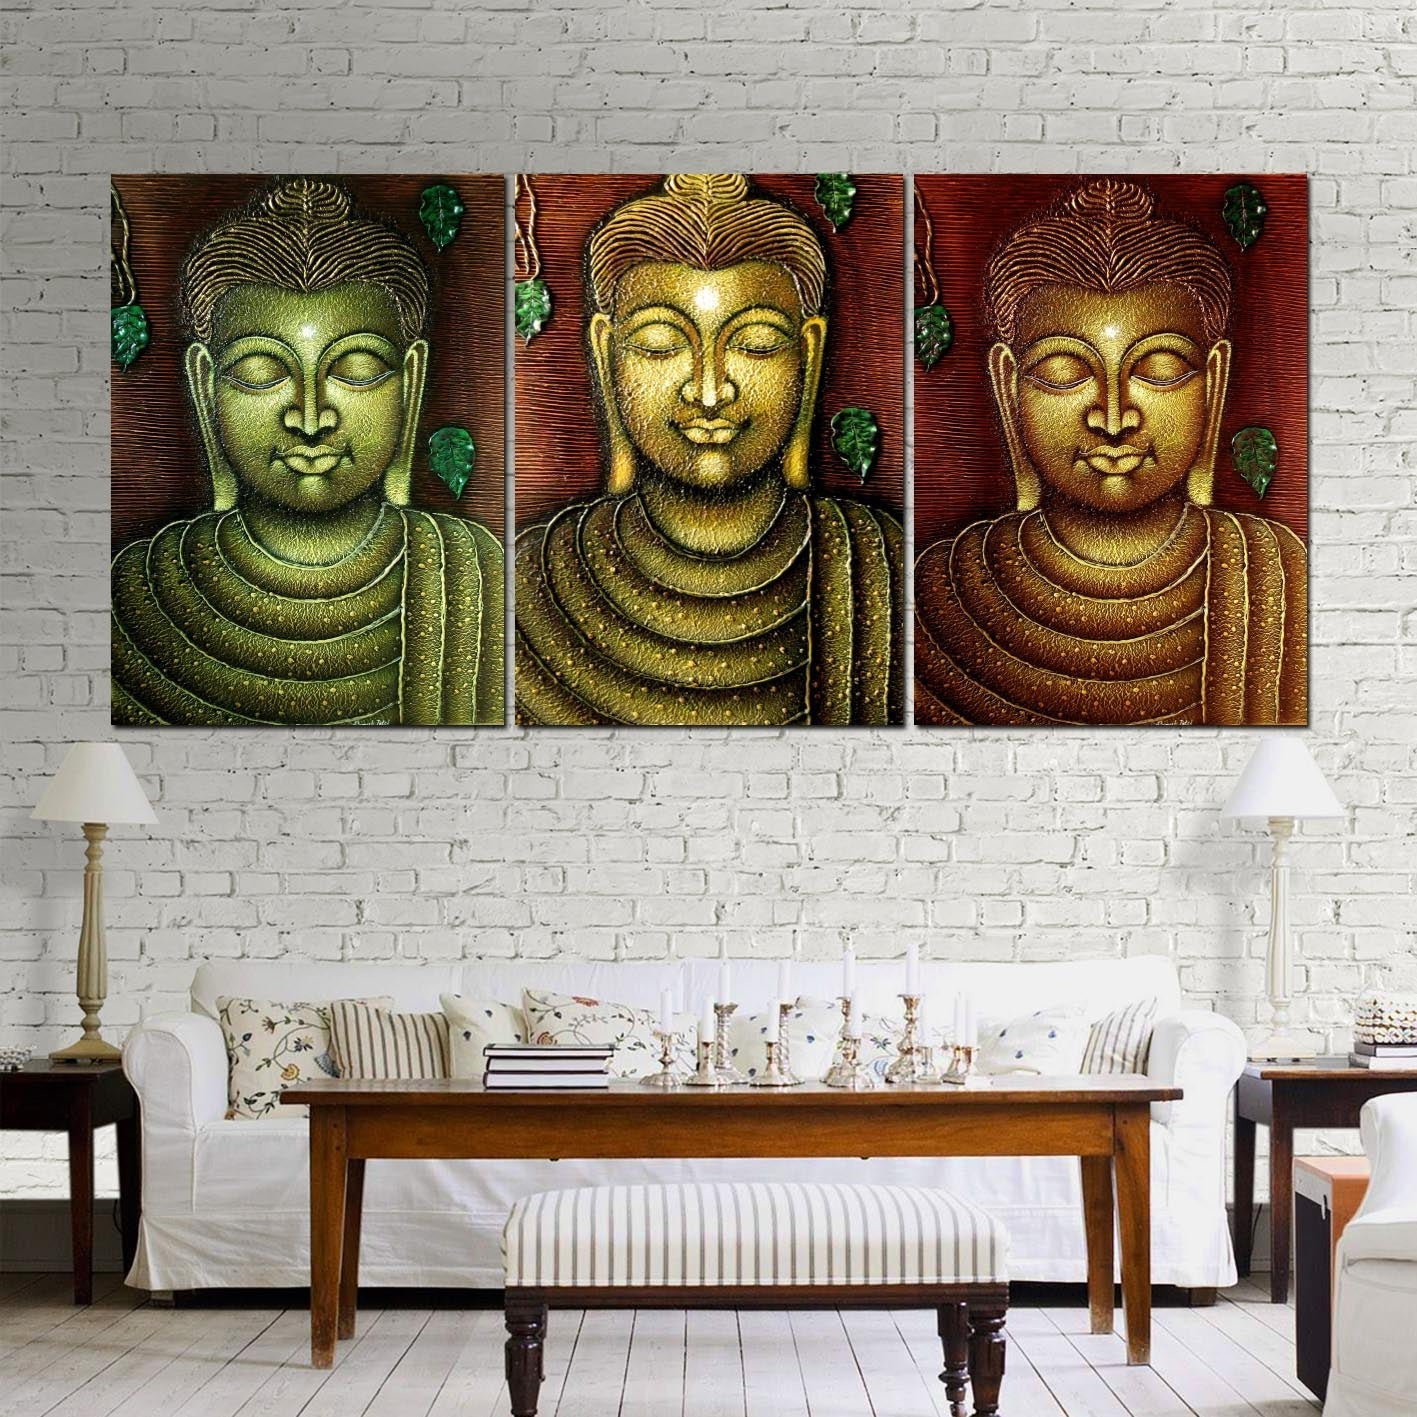 https://cdn.shopify.com/s/files/1/0387/9986/8044/products/Three_Colors_of_Buddha_2.jpg